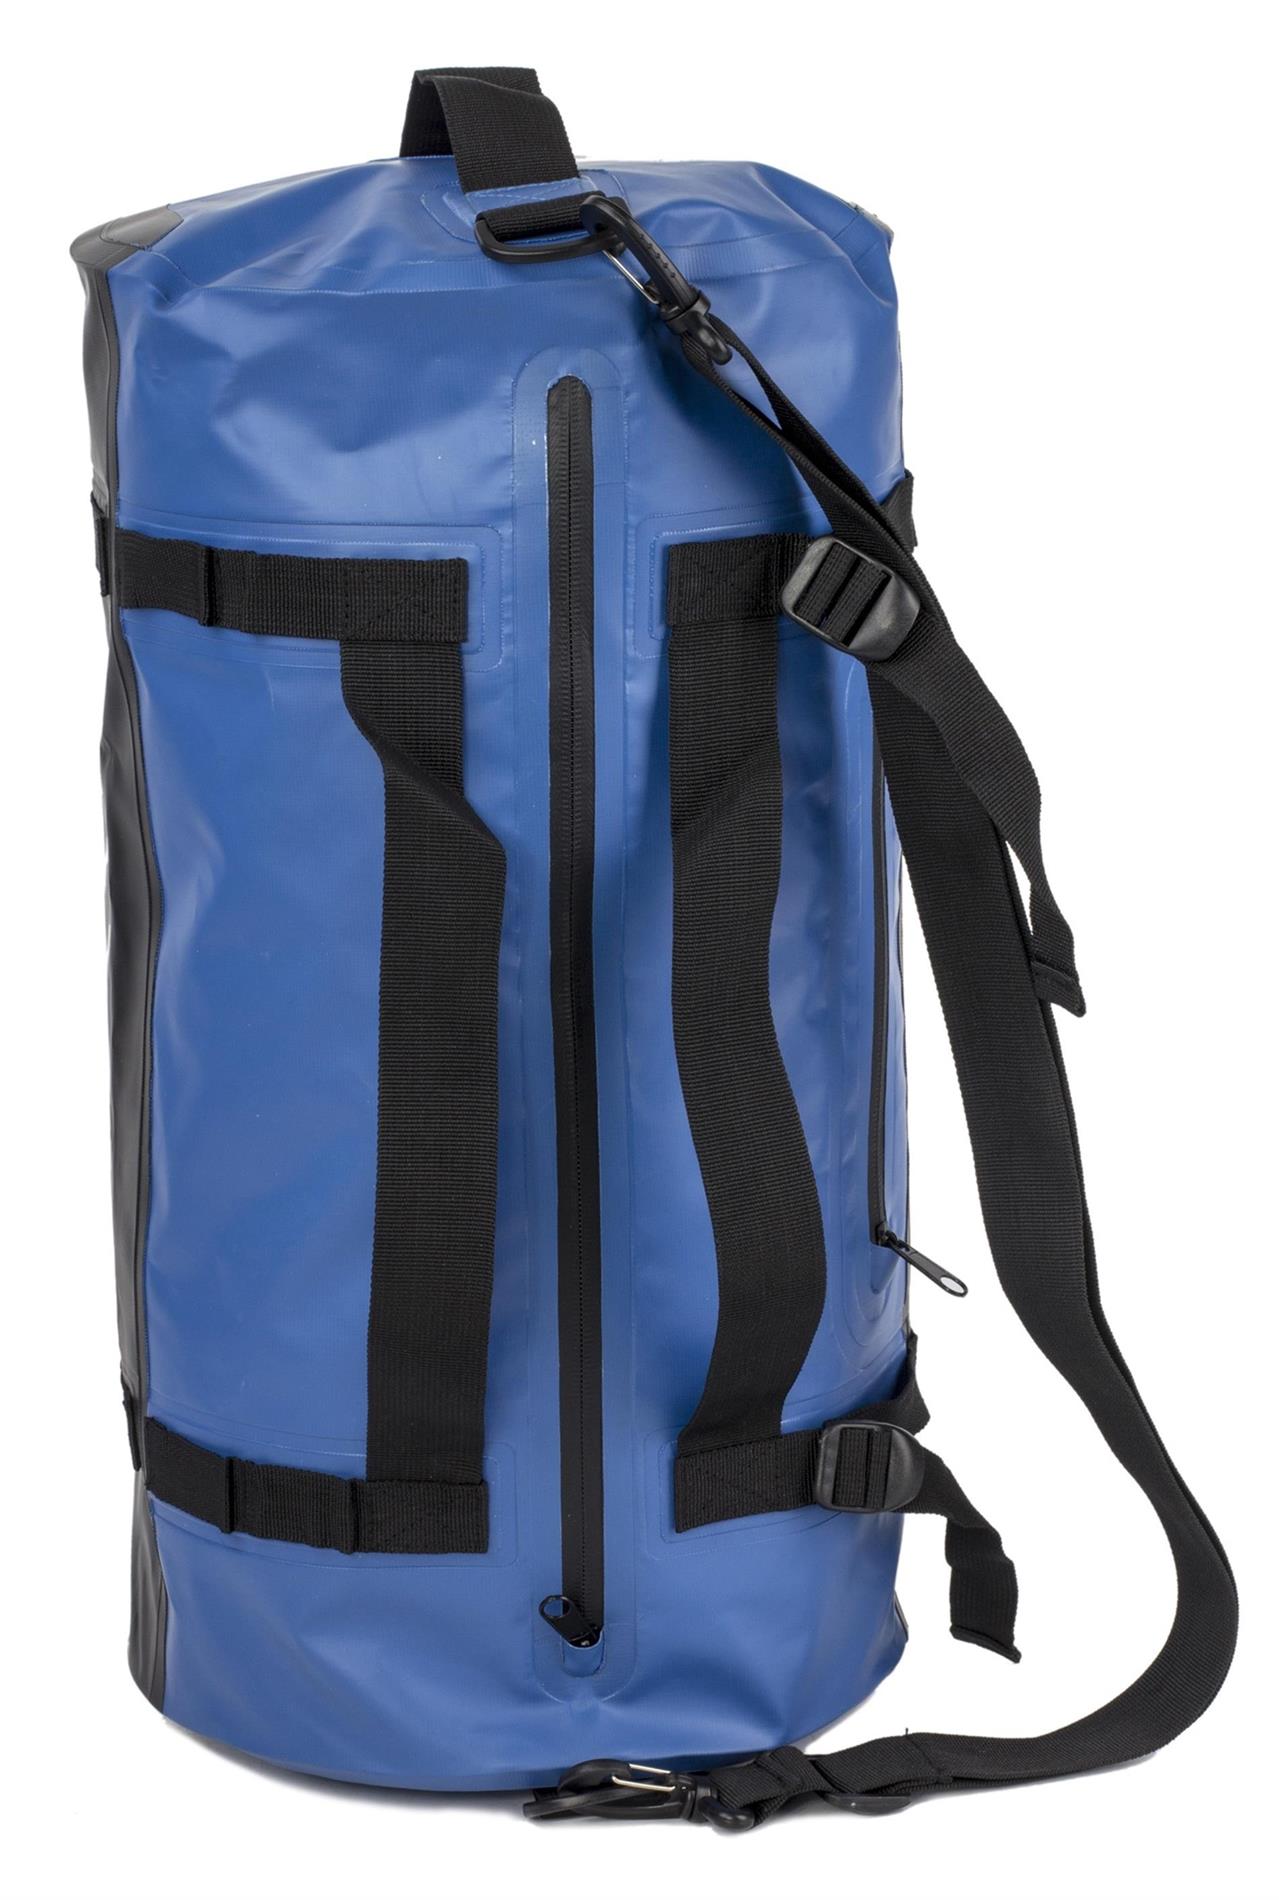 Waterproof Duffle Bag ,traveling with eas handle& shoulder strap 30L